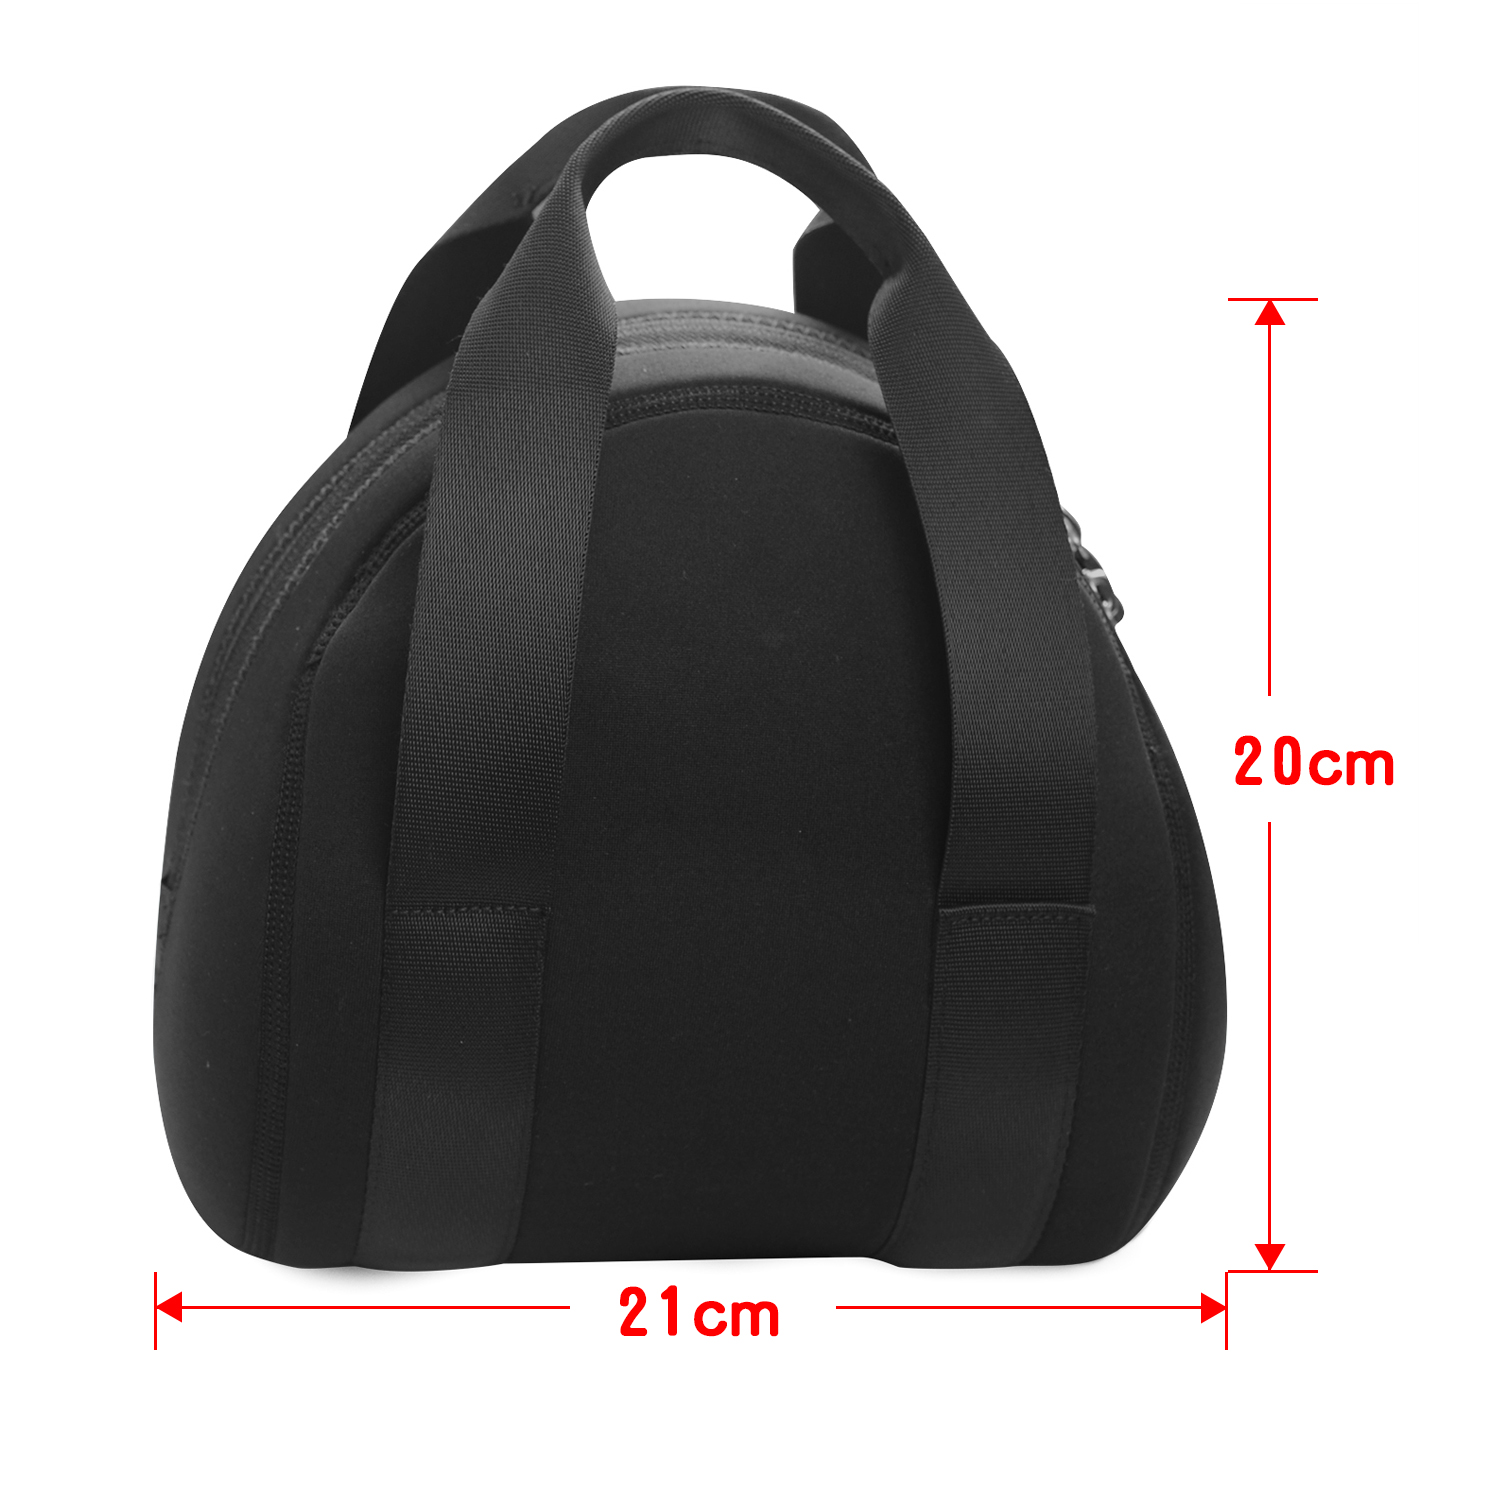 Bakeey Speaker Storage Bag Protective Cover Handbag Portable Outdoor Travel Spots Soft Carrying Bag for Apple for HomePod bluetooth Speaker